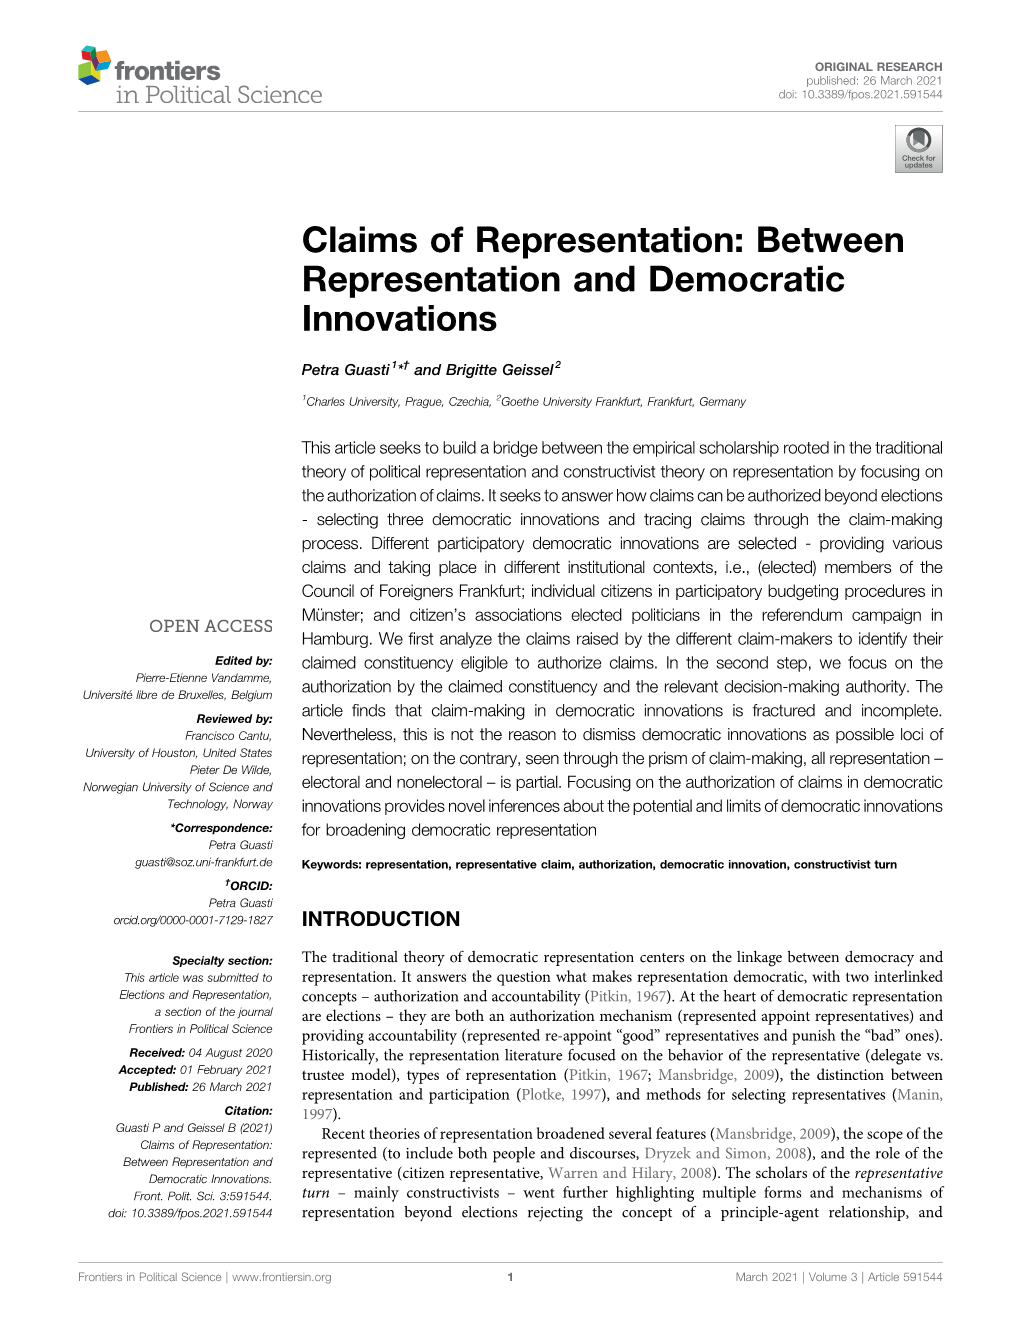 Between Representation and Democratic Innovations